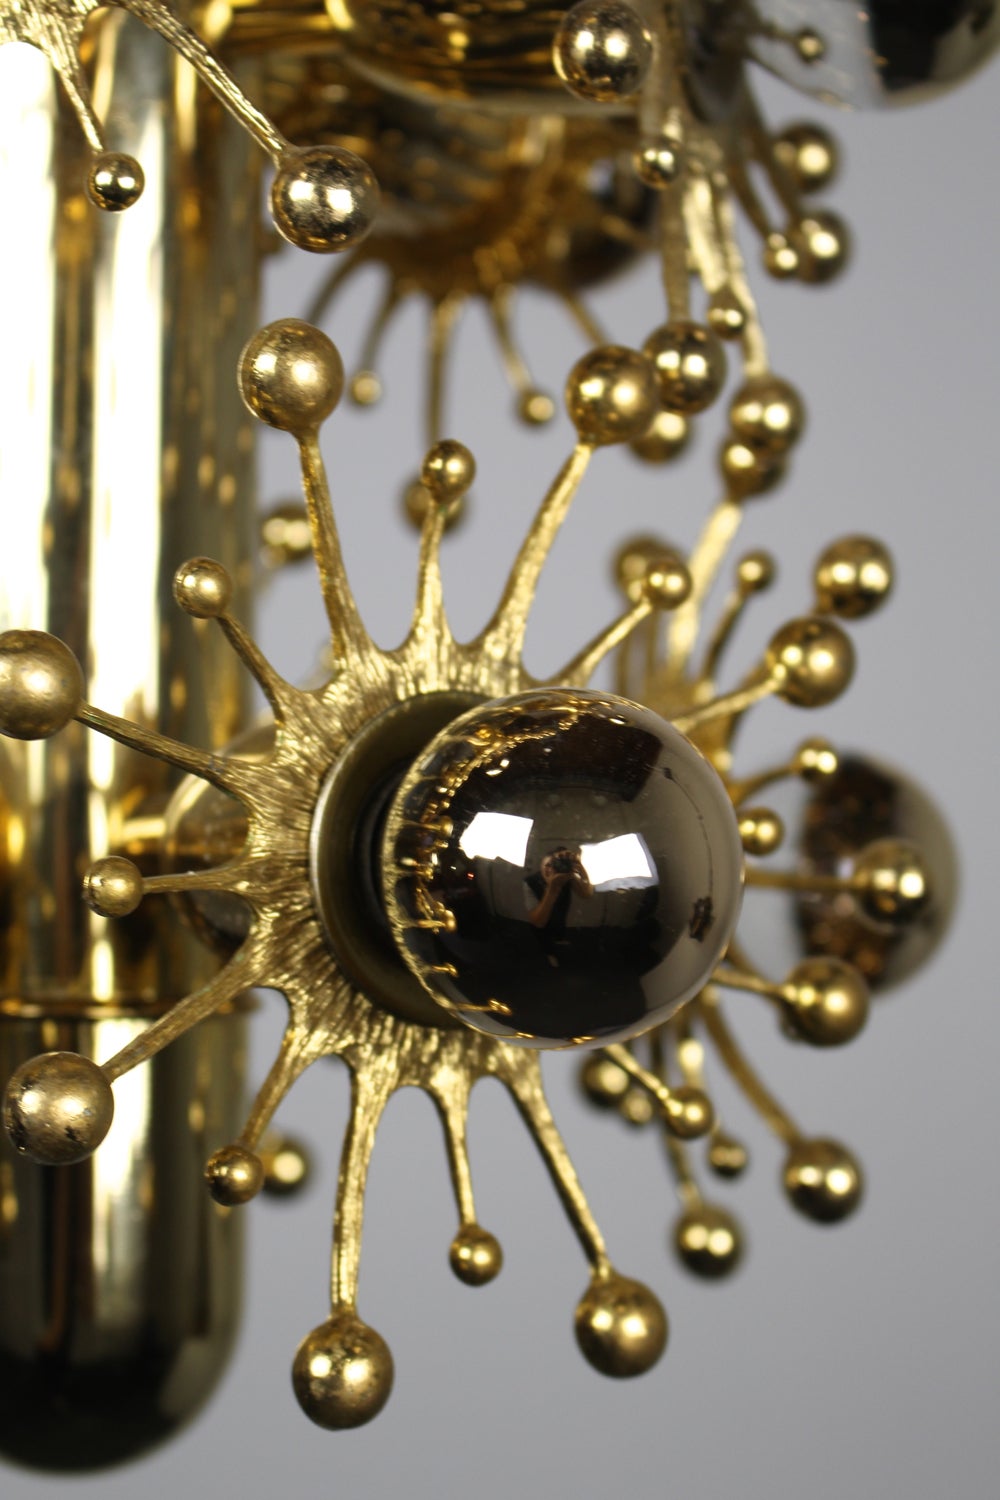 Mid-20th Century Midcentury Gold Sputnik Style Pendant Light with Mirrored Bulbs